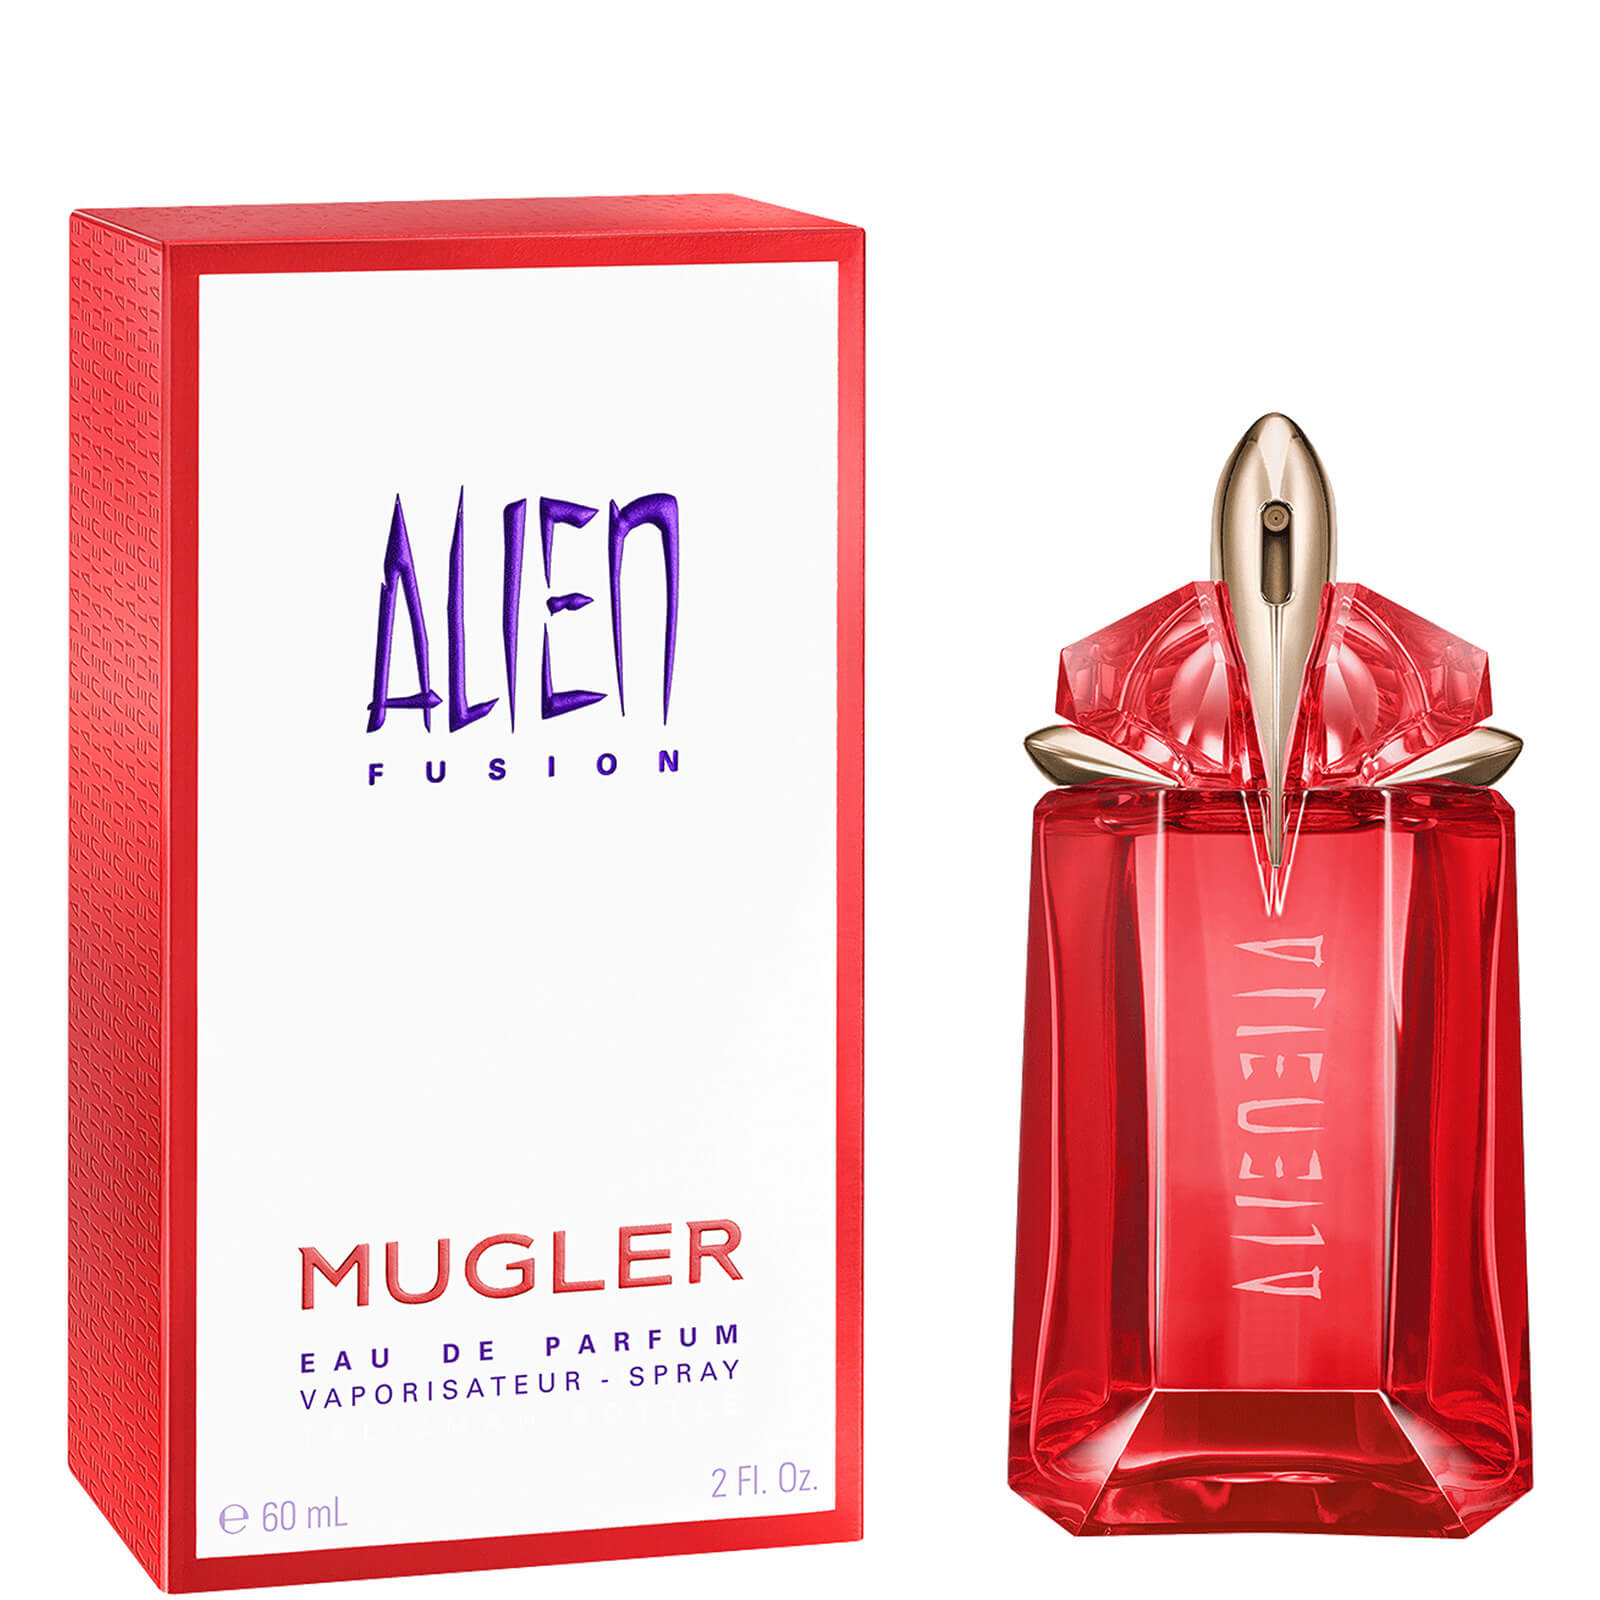 MUGLER Alien Fusion Eau de Parfum - 60ml